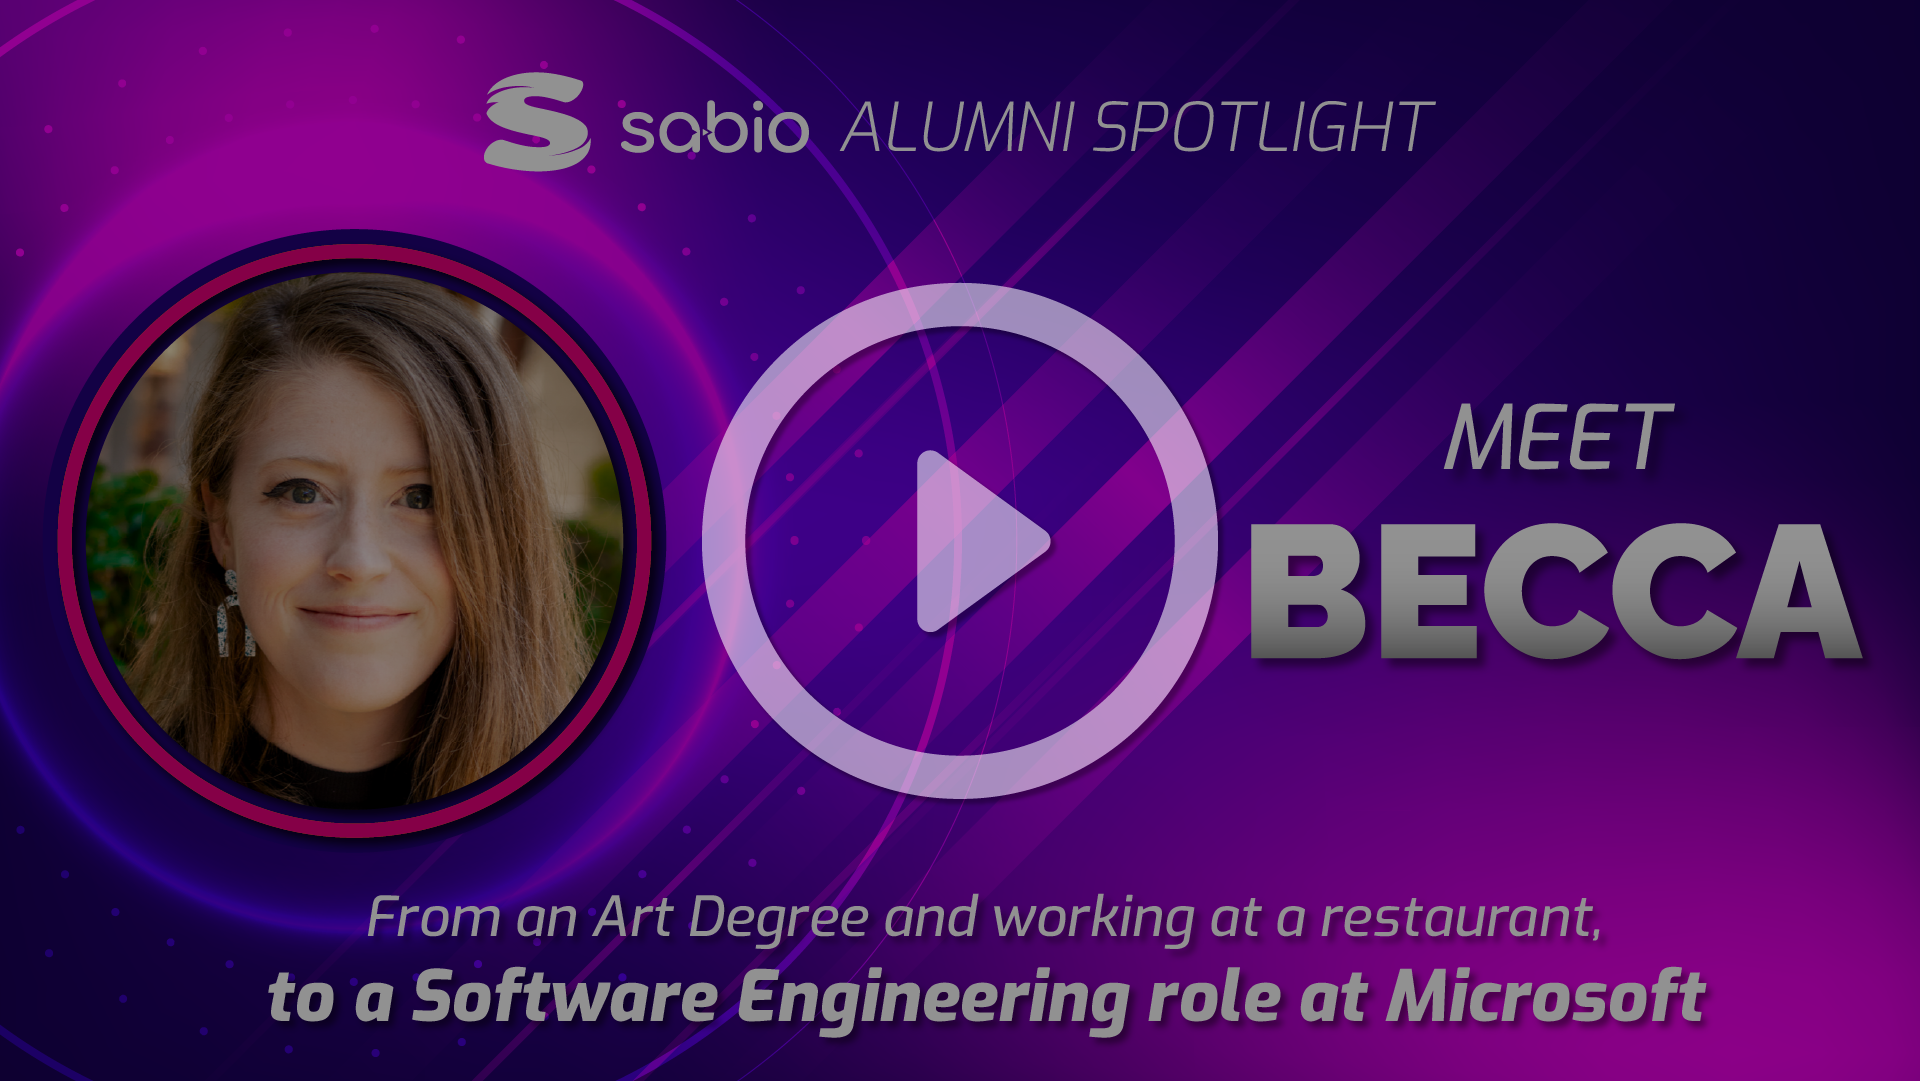 Sabio Alumni Spotlight: Becca. Play symbol overlaid to the image.